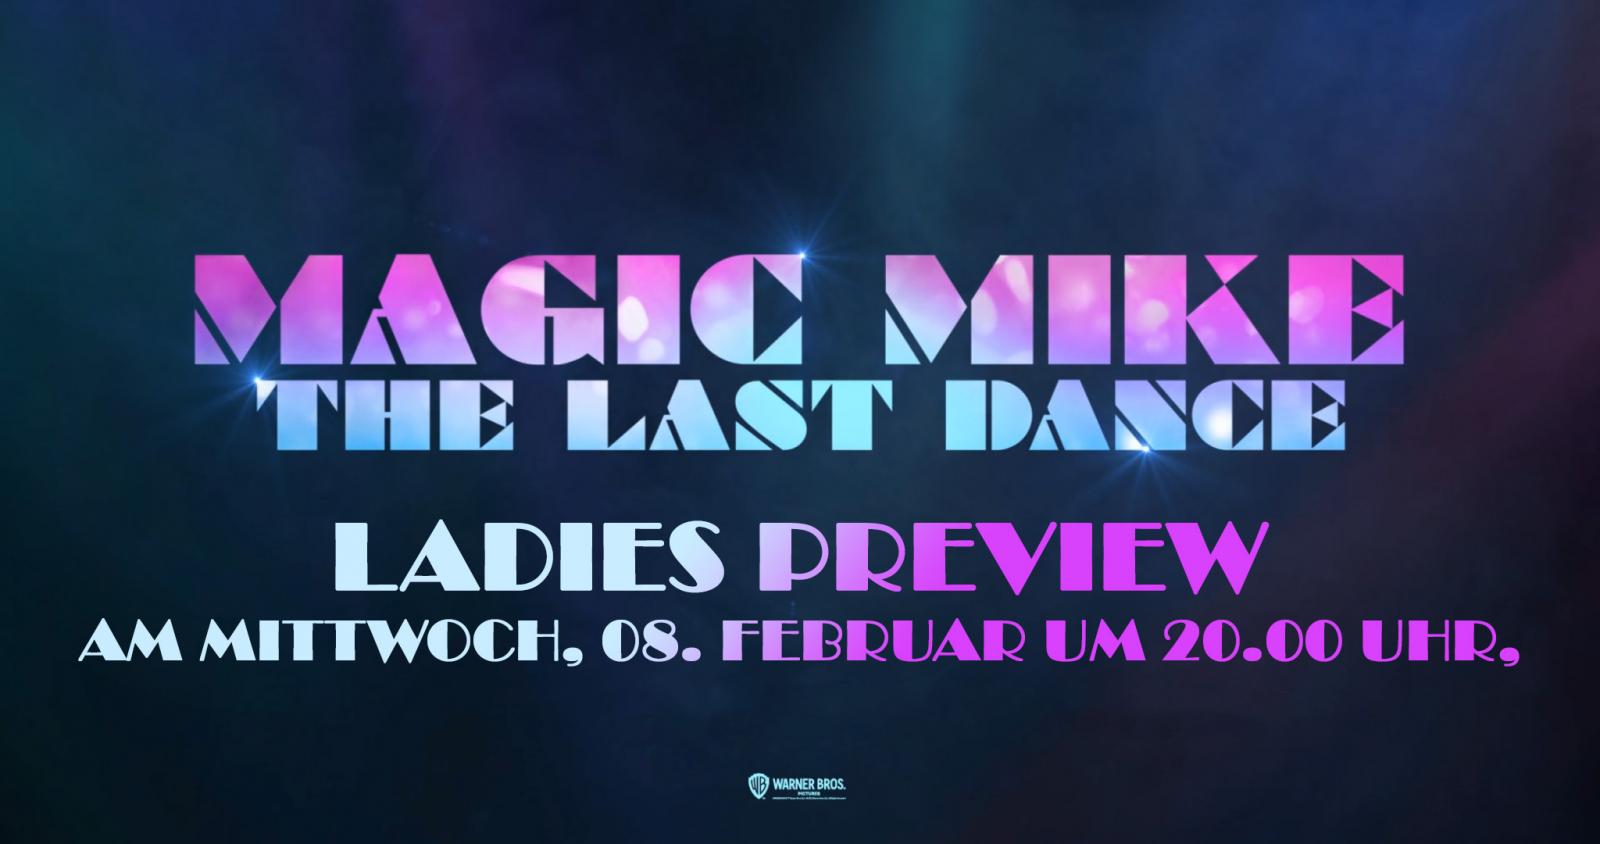 Ladies Preview Magic Mike's Last Dance